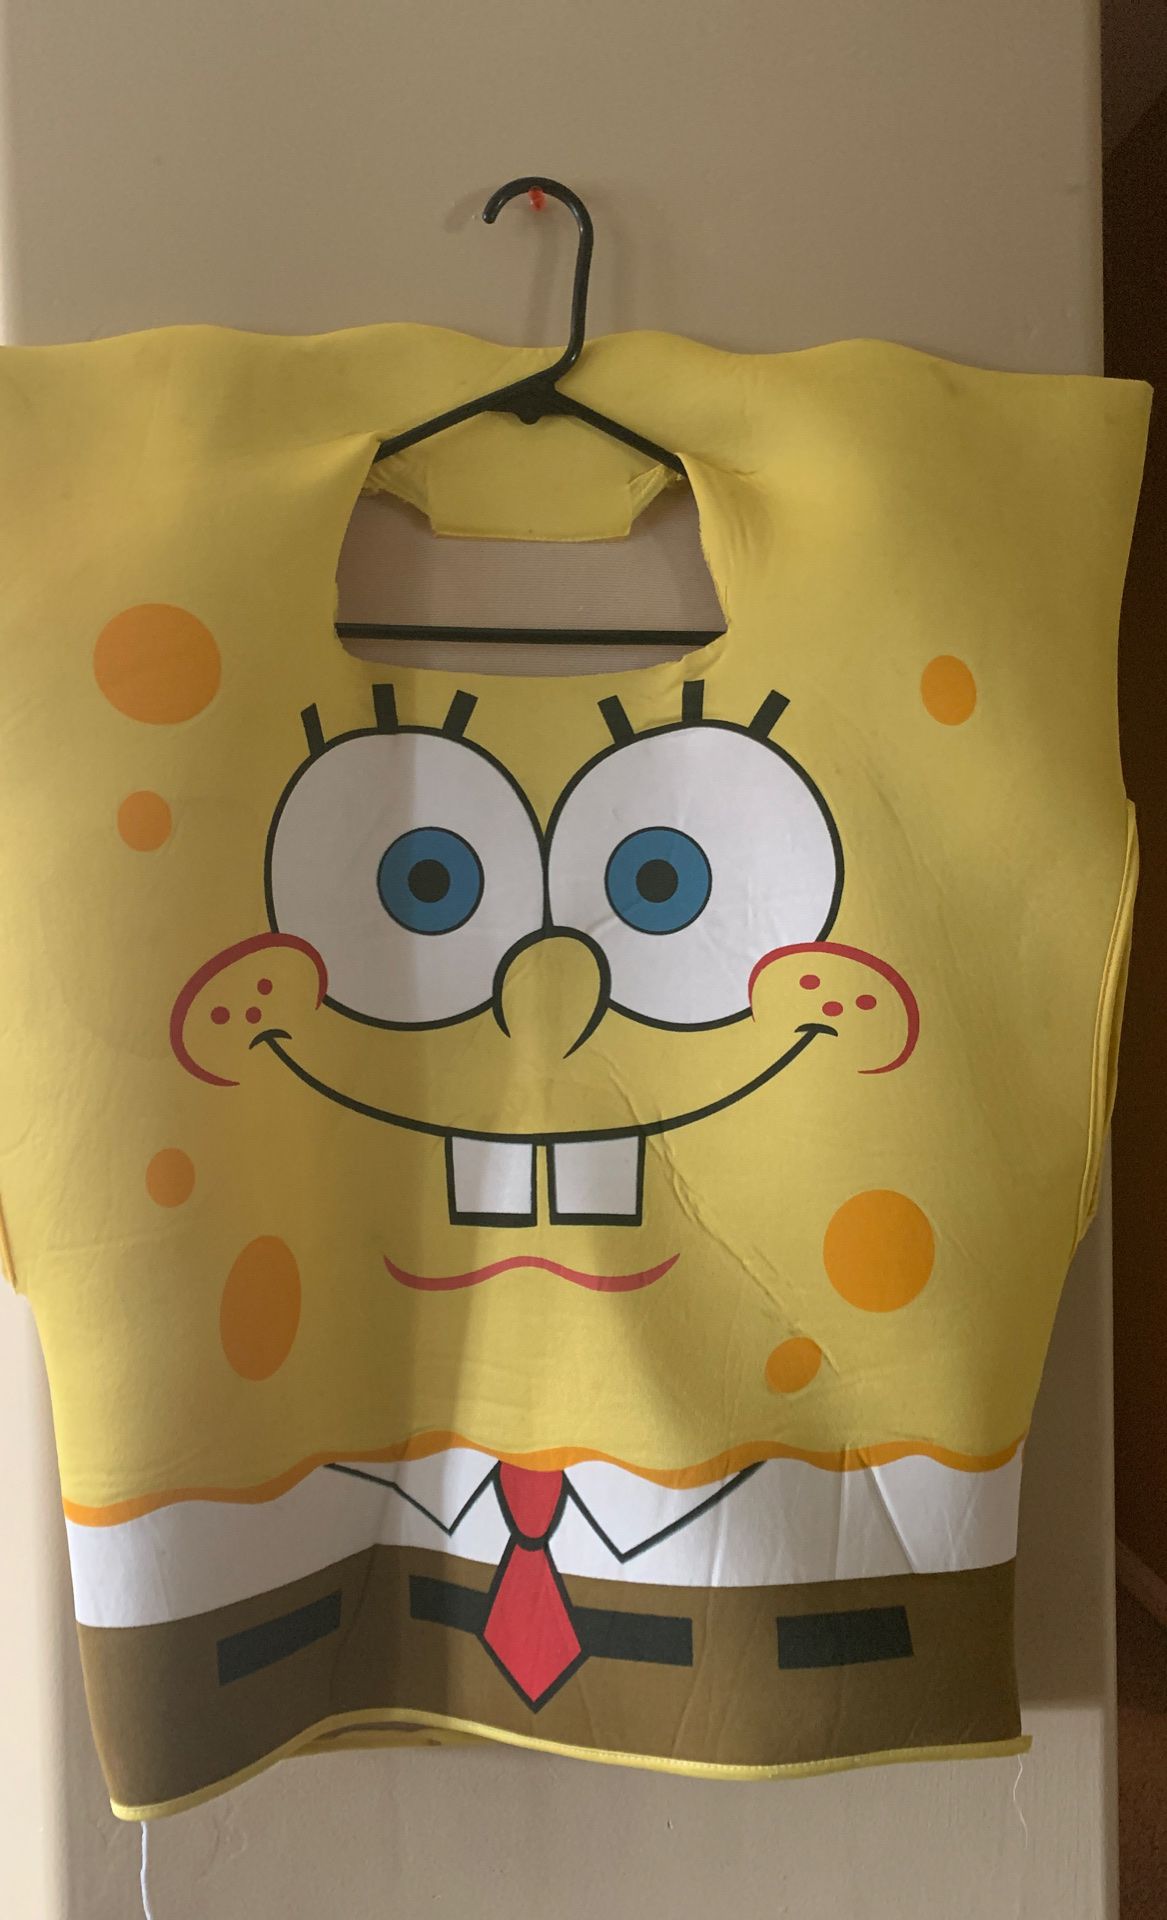 Spongebob costume